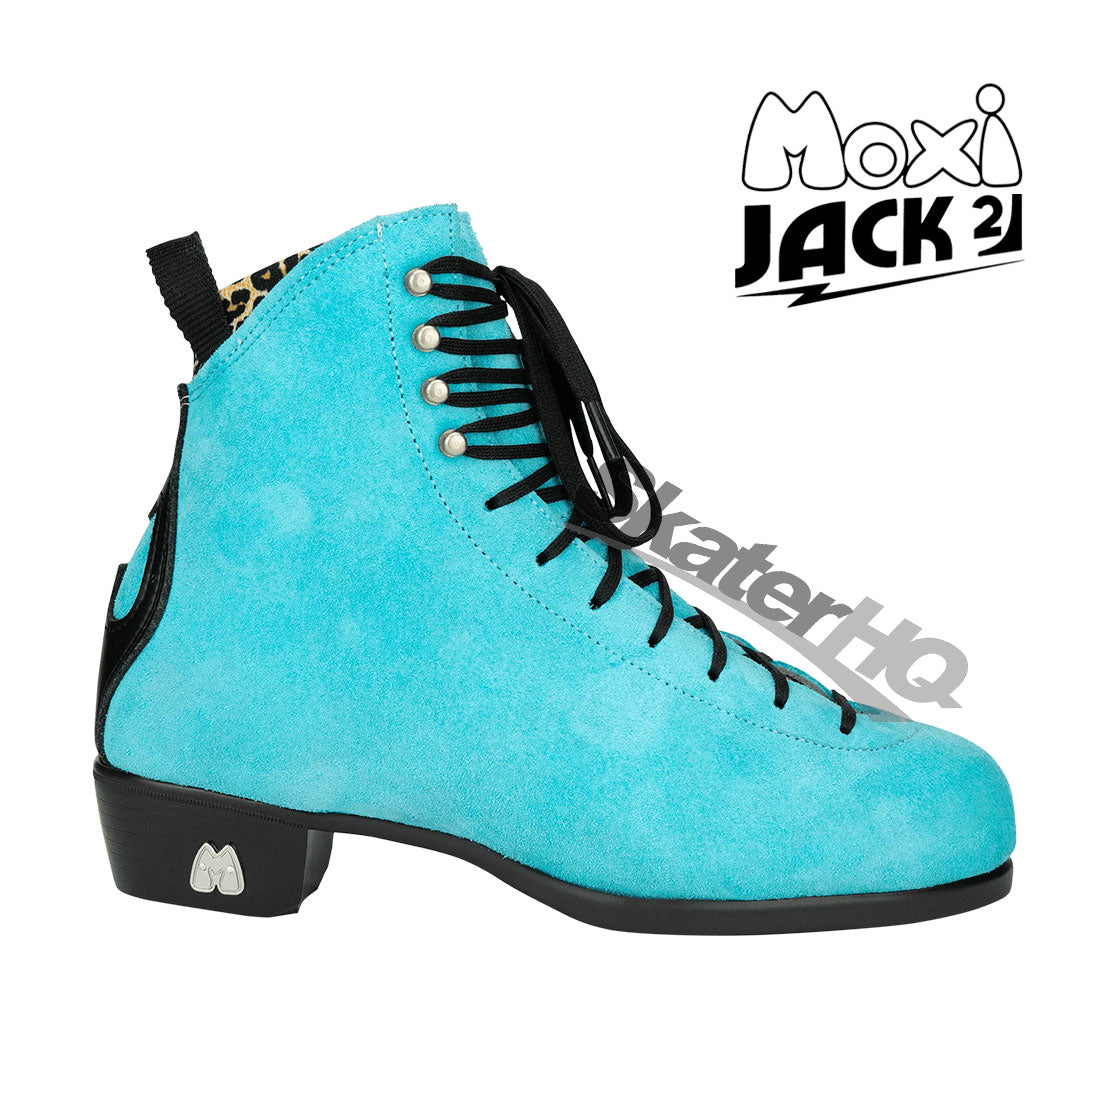 Moxi Jack 2 Boot - True Blue - Size 8 Roller Skate Boots